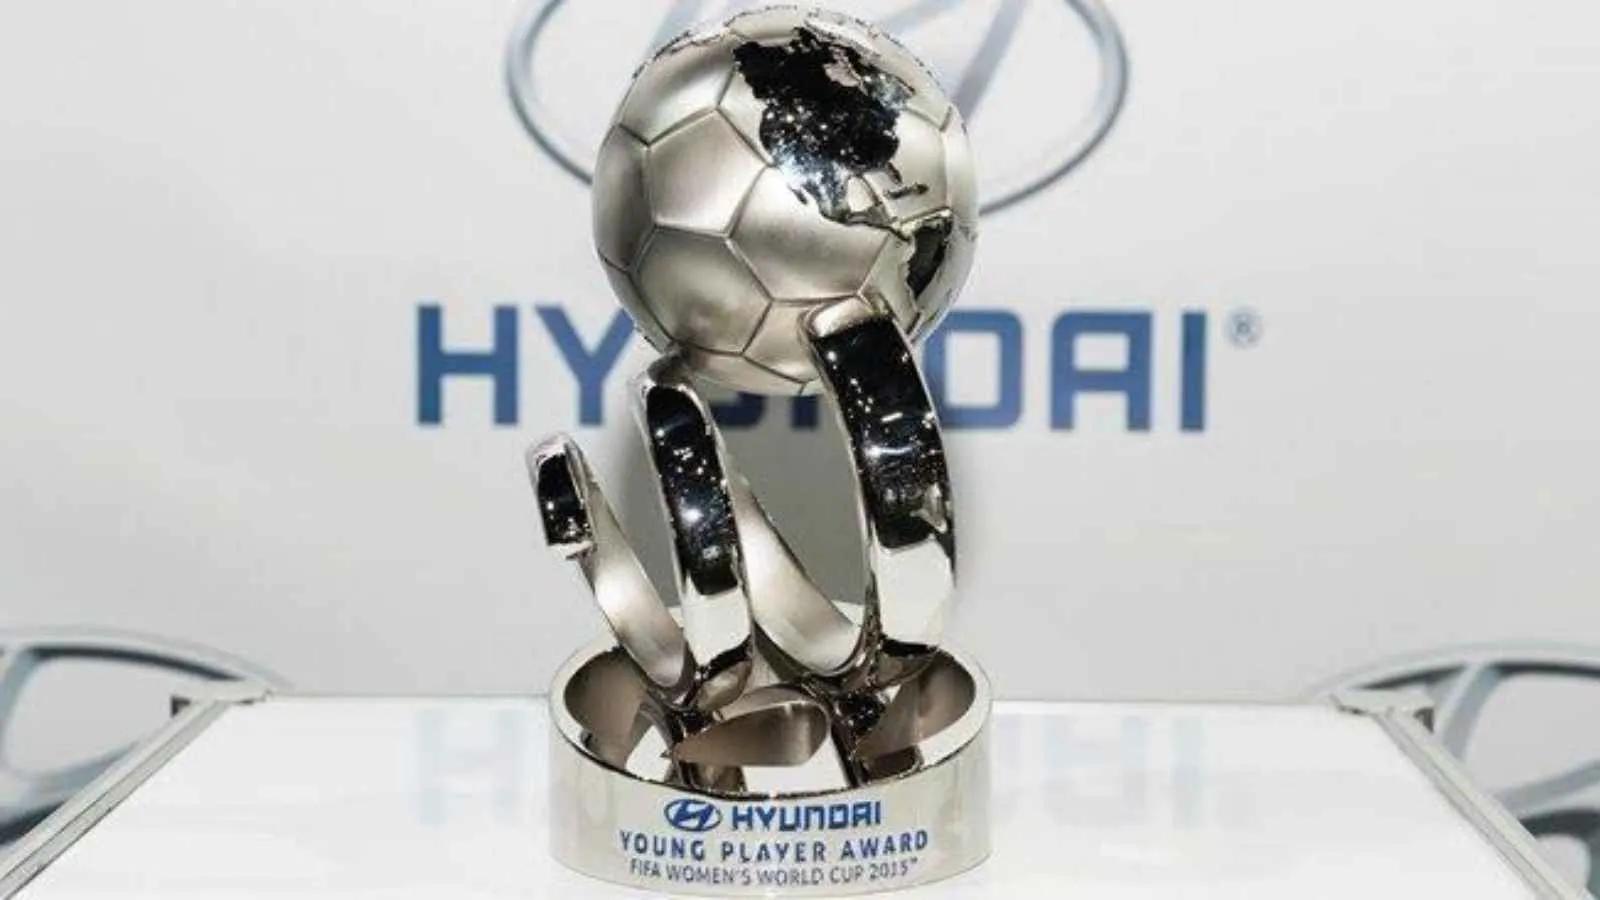 FIFA Qatar 2022 World Cup Young Player Award